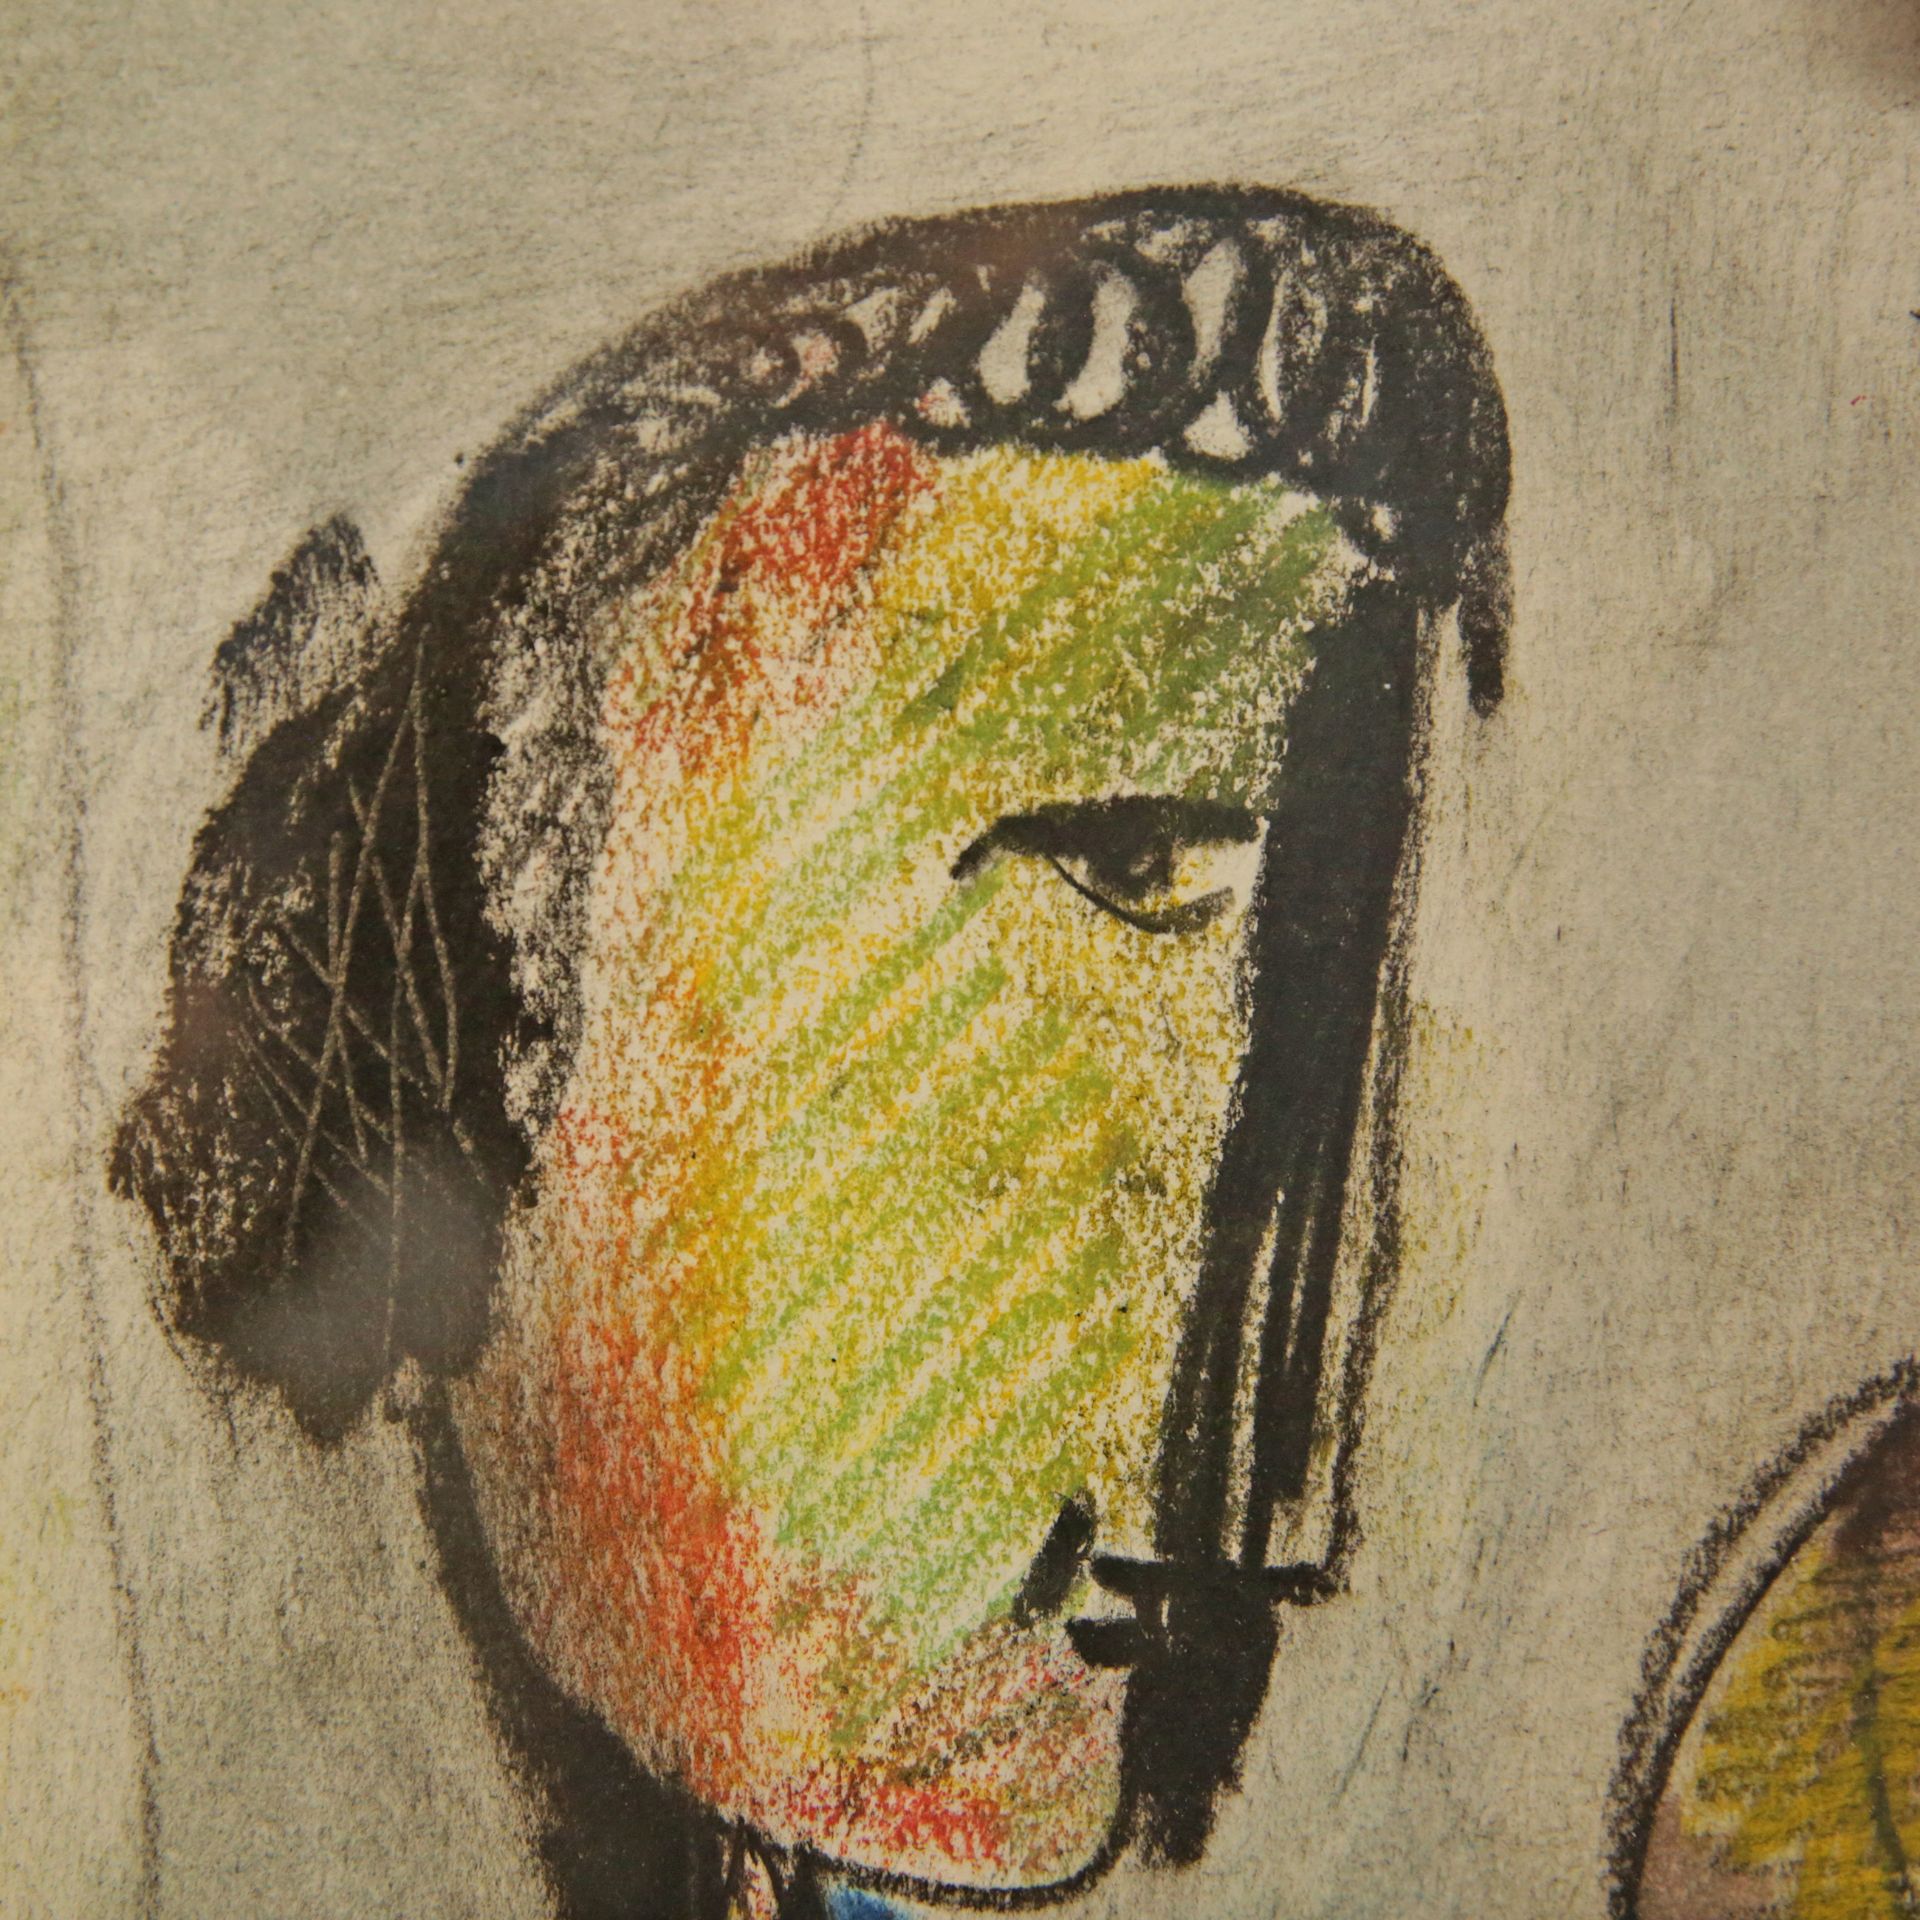 Manfredo BORSI (Italian, 1900 - 1967) "Characters in an interior" 1955, oil and pastel on paper. - Bild 4 aus 5